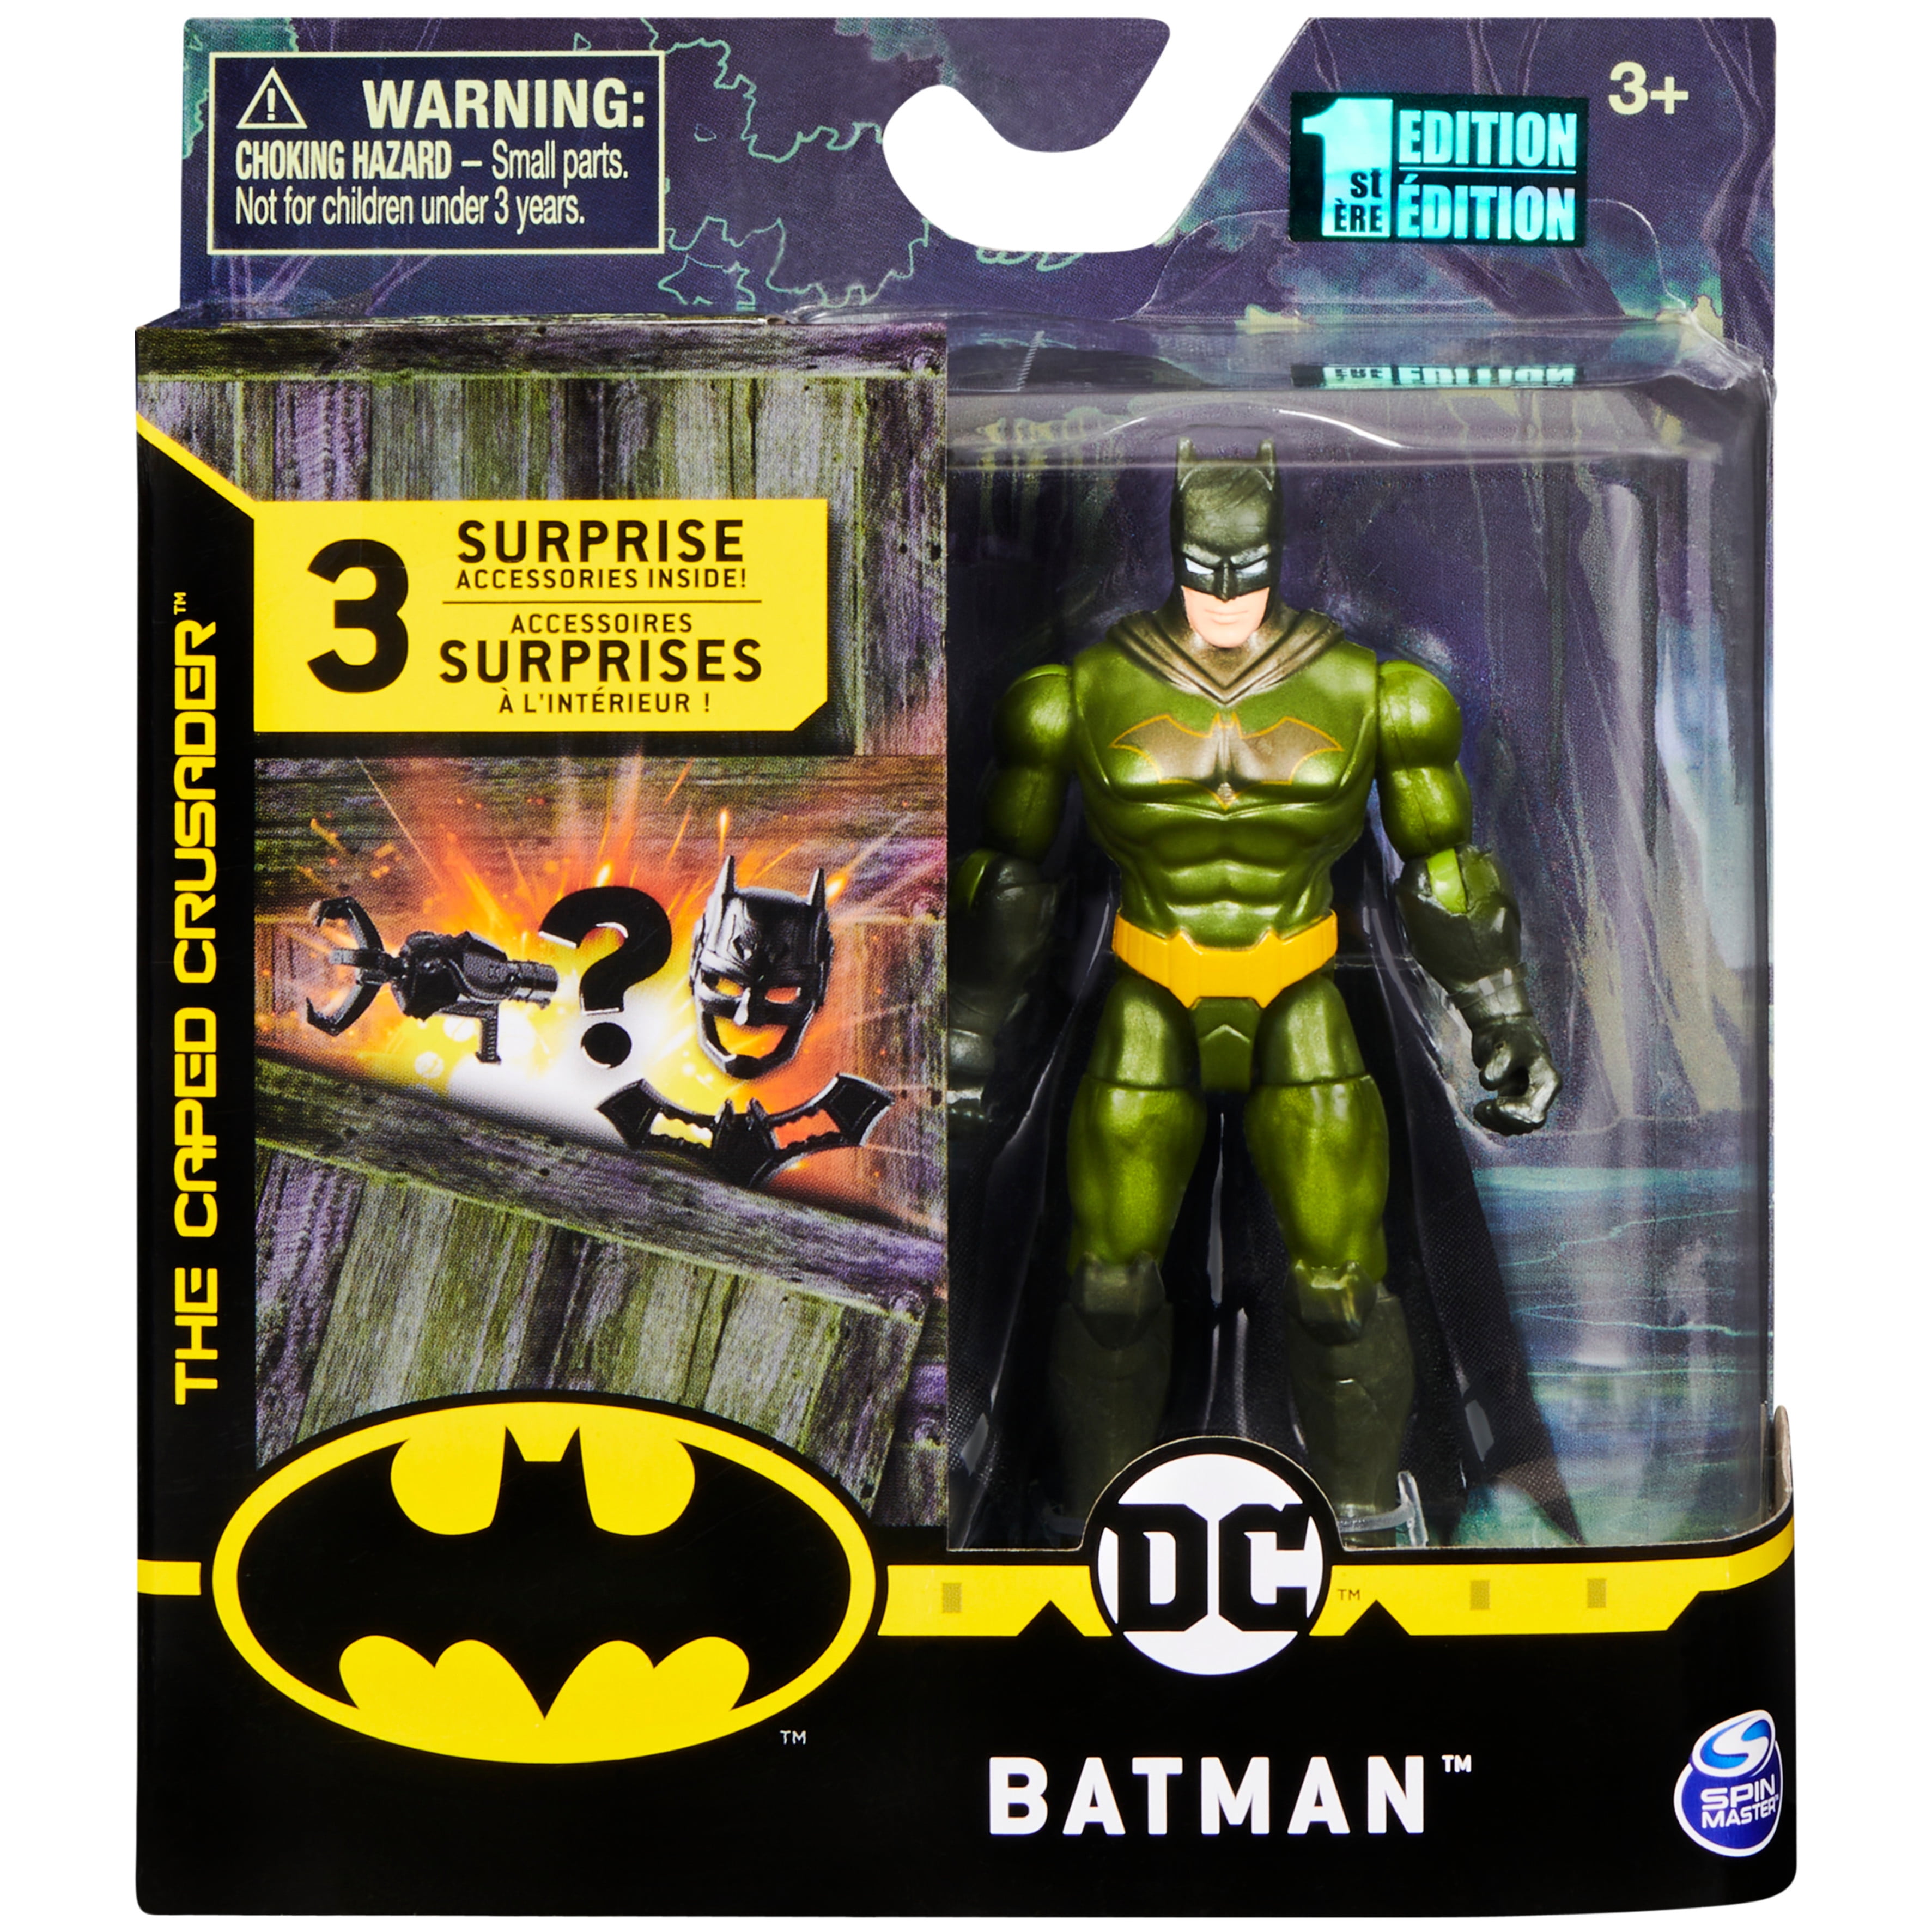 Batman: 4 Action Figure with 3 Mystery Accessories Assortment Hi-Tech Batman